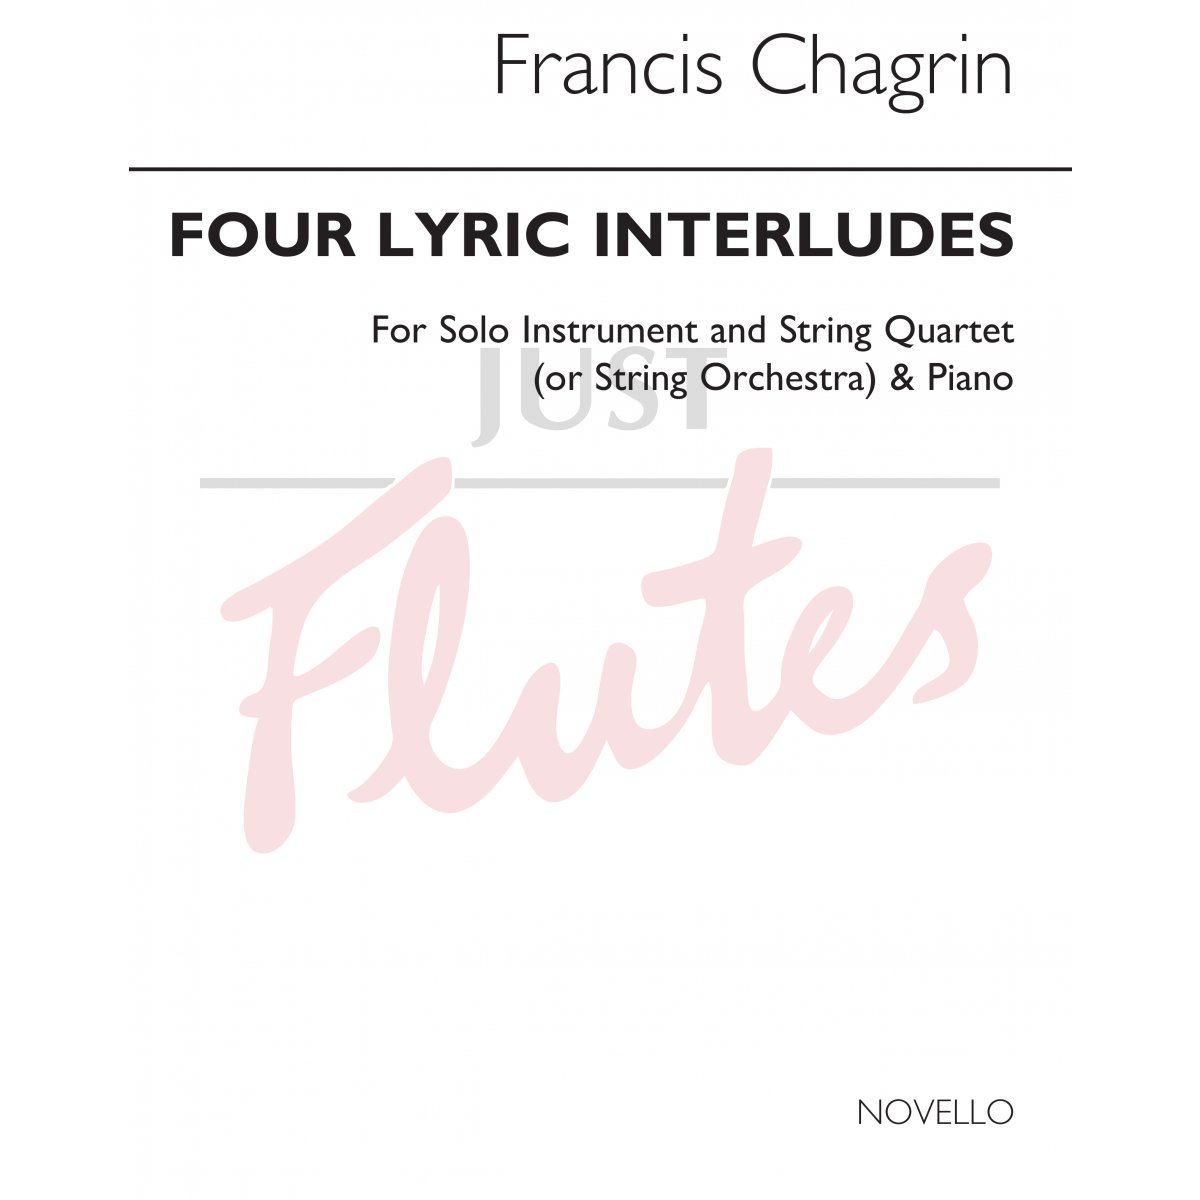 Four Lyric Interludes